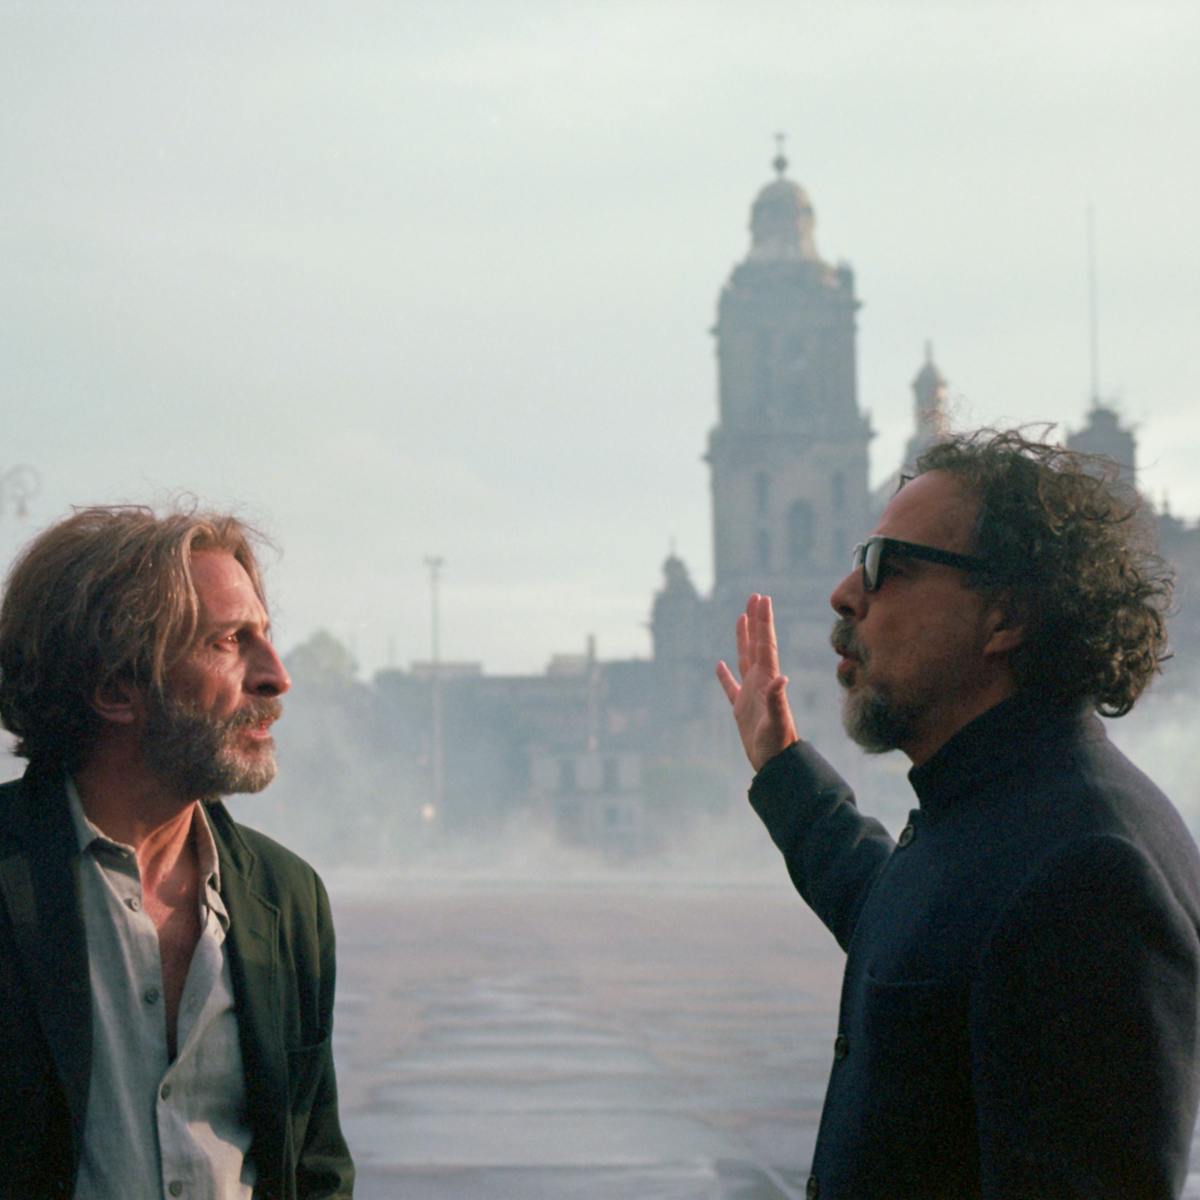 Daniel Giménez Cacho and Alejandro González Iñárritu talk outside an ornate building against a light grey sky.